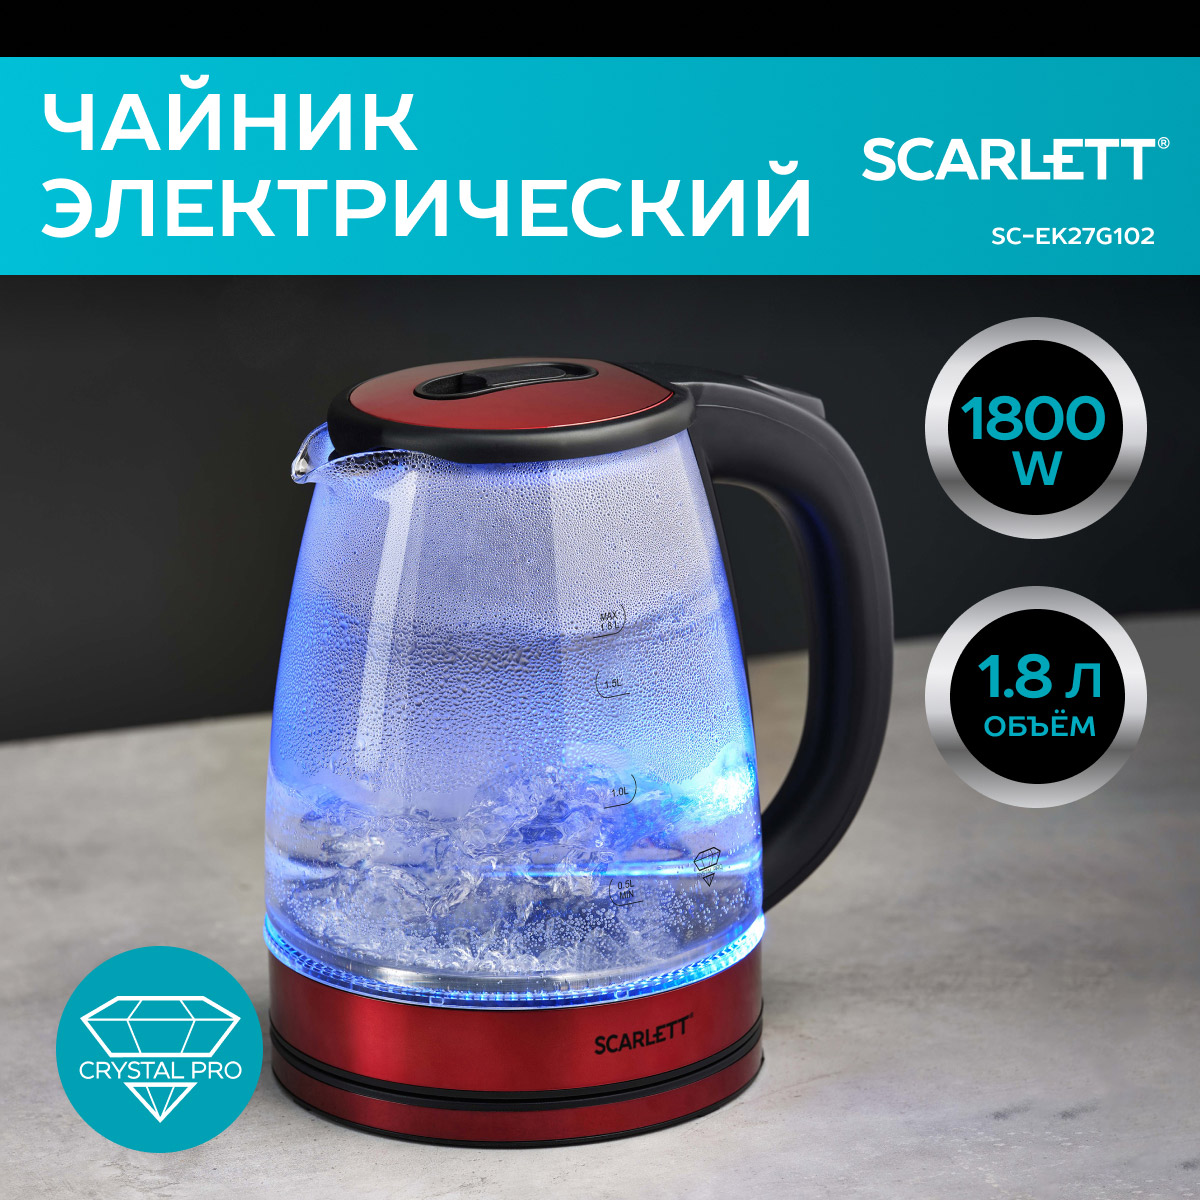 Чайник электрический Scarlett SC-EK27G102 1.8 л красный